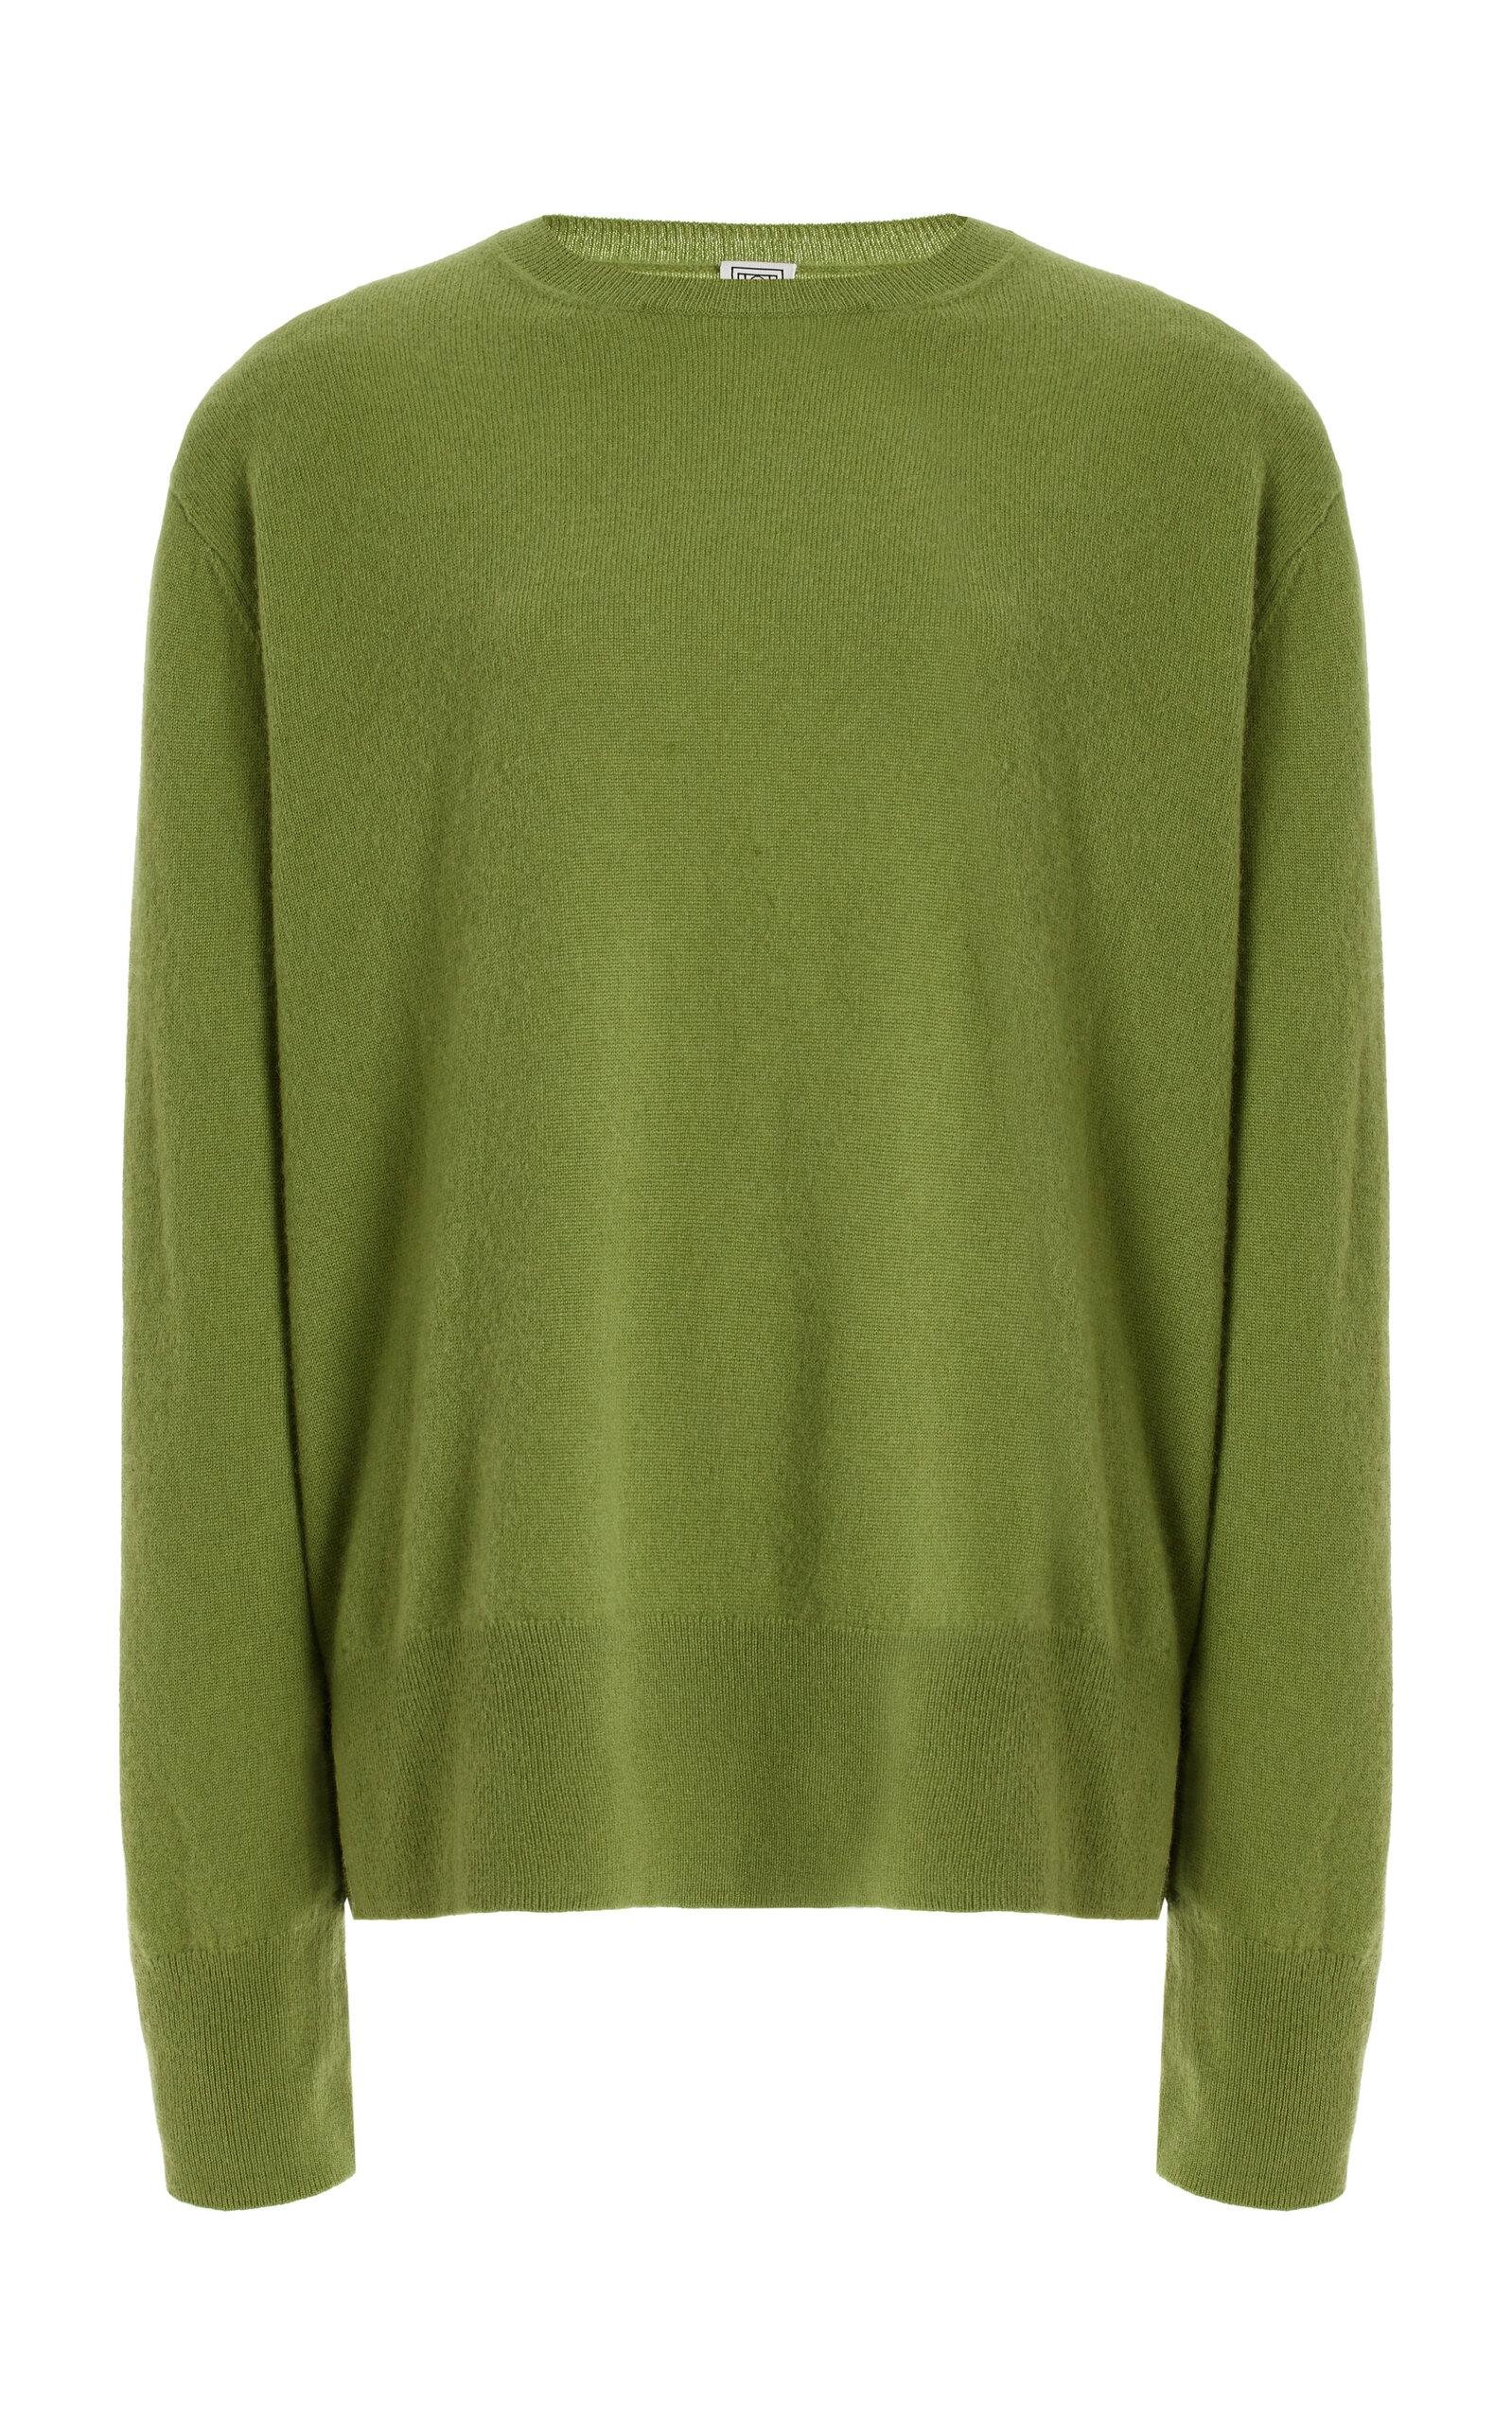 Toteme - Knit Cashmere Sweater - Green - S - Moda Operandi by TOTEME